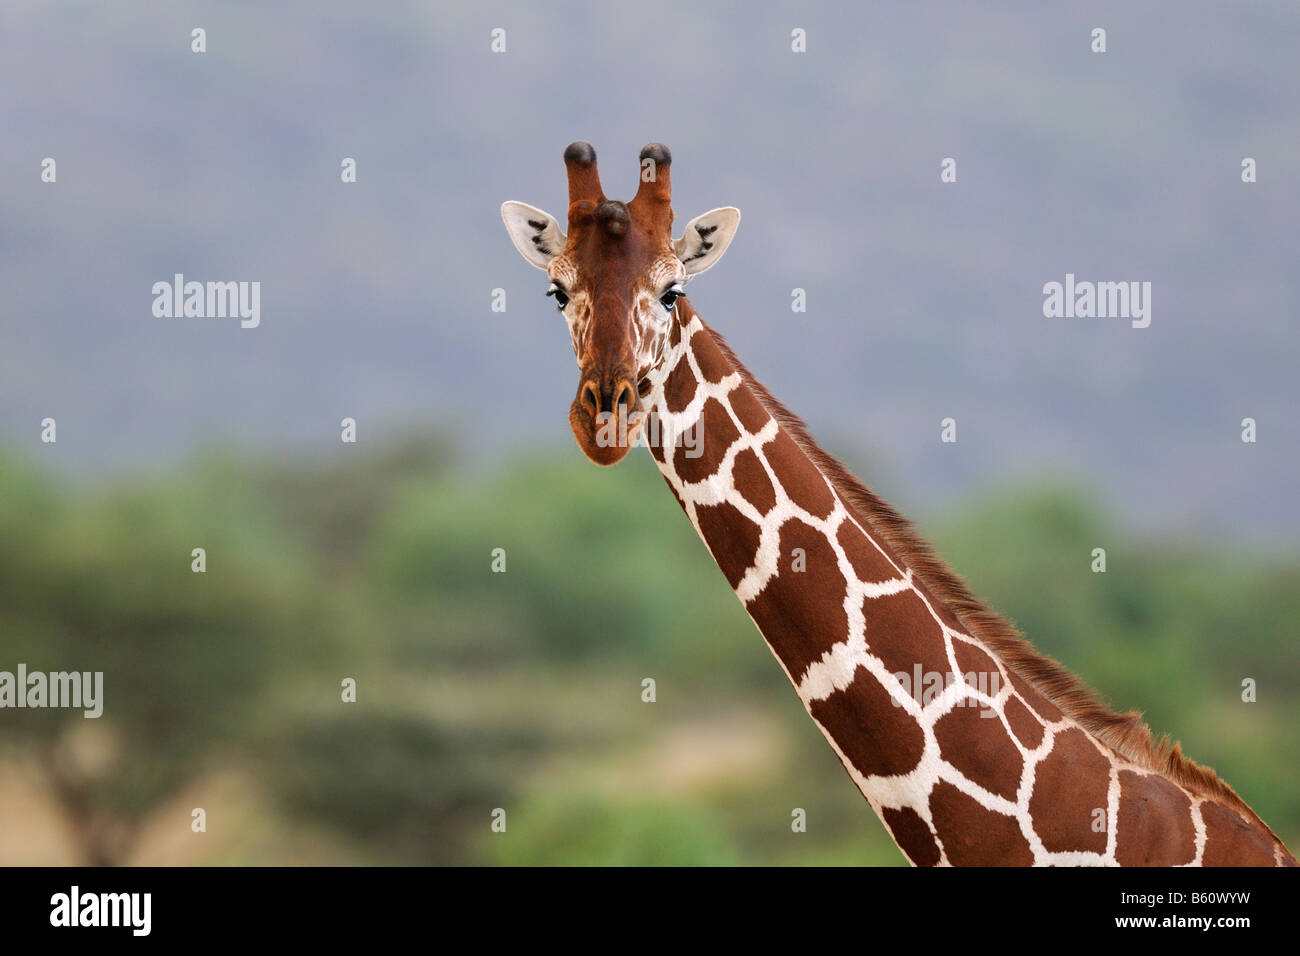 Girafe réticulée ou somaliens Girafe (Giraffa camelopardalis reticulata), portrait, Samburu National Reserve, Kenya, Africa Banque D'Images